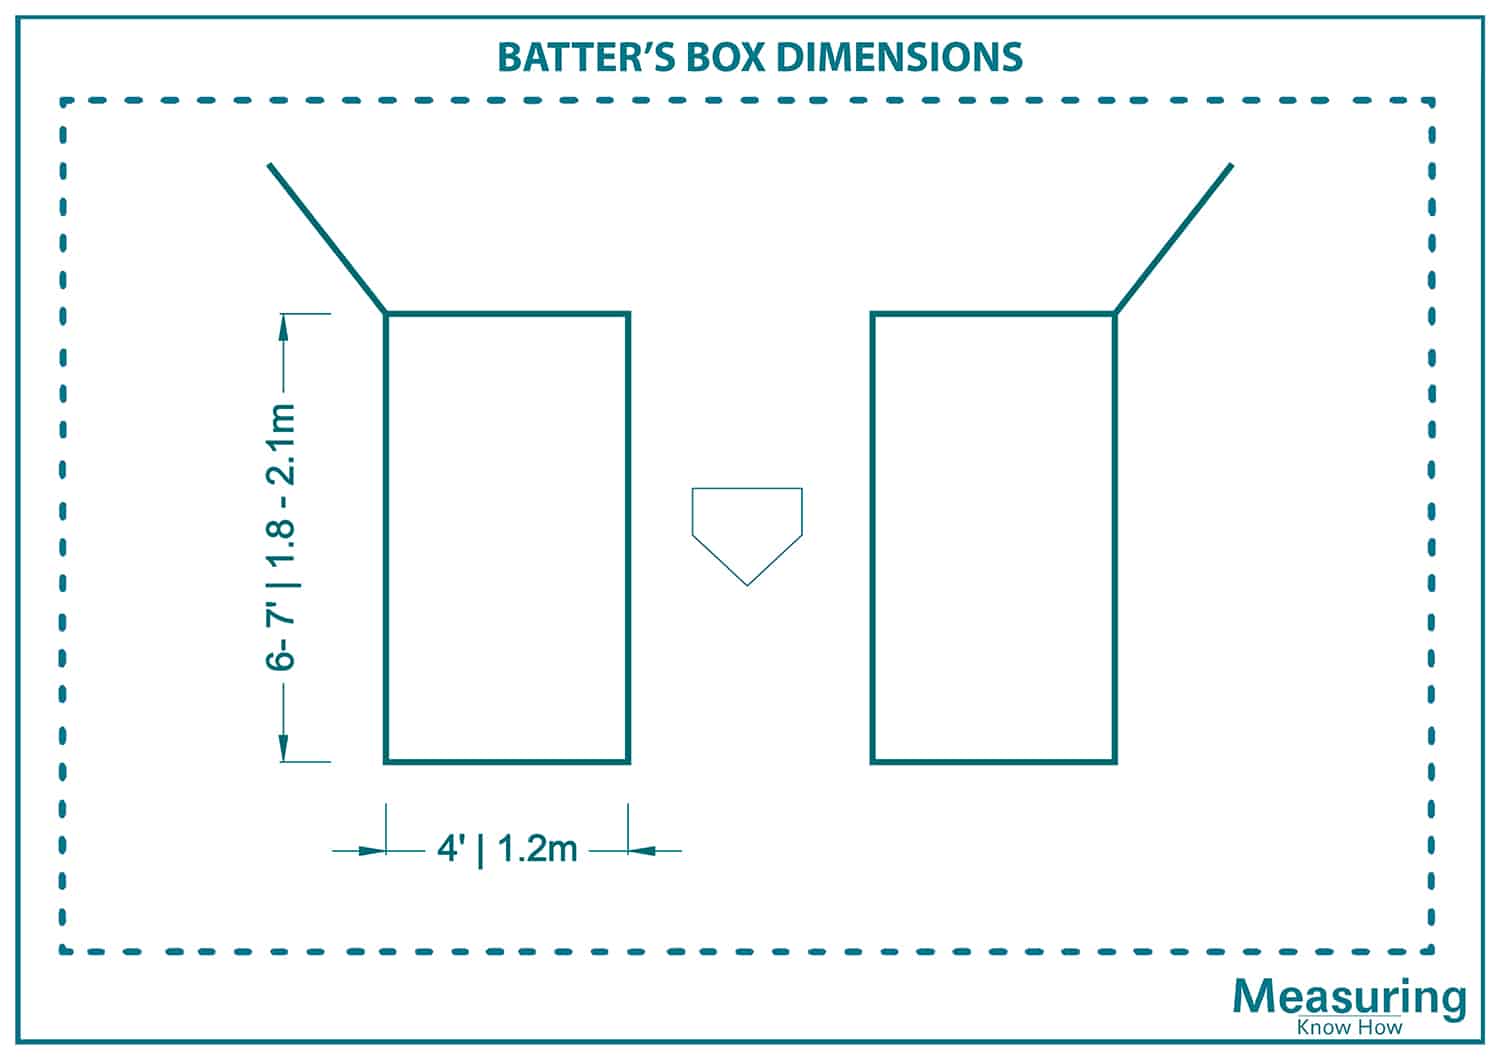 Batte’s box dimensions